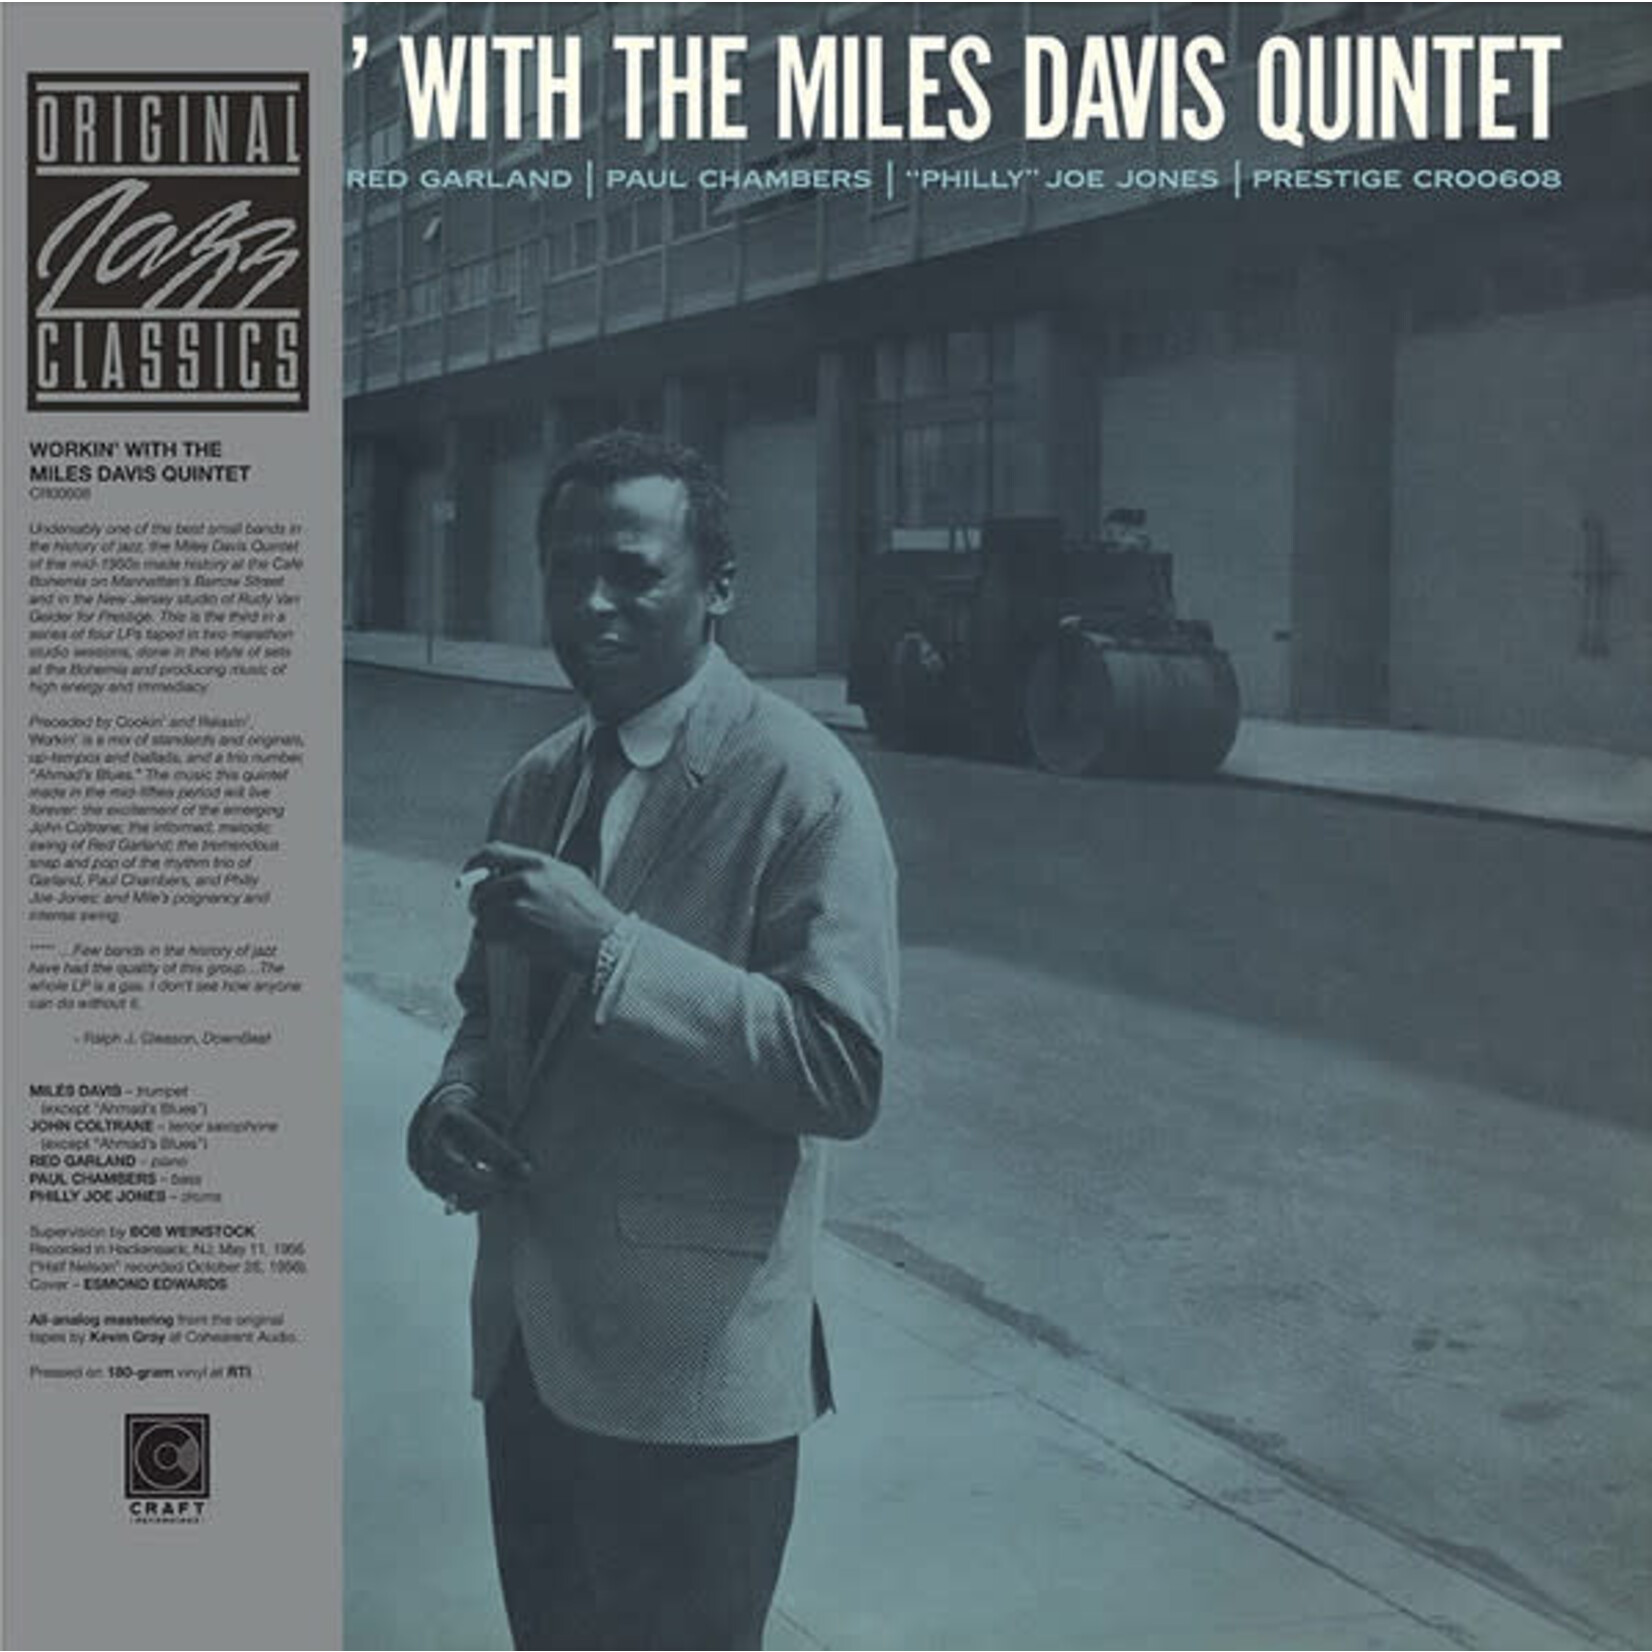 [New] Miles Davis Quintet - Workin' With The Miles Davis Quintet (Original Jazz Classics series)